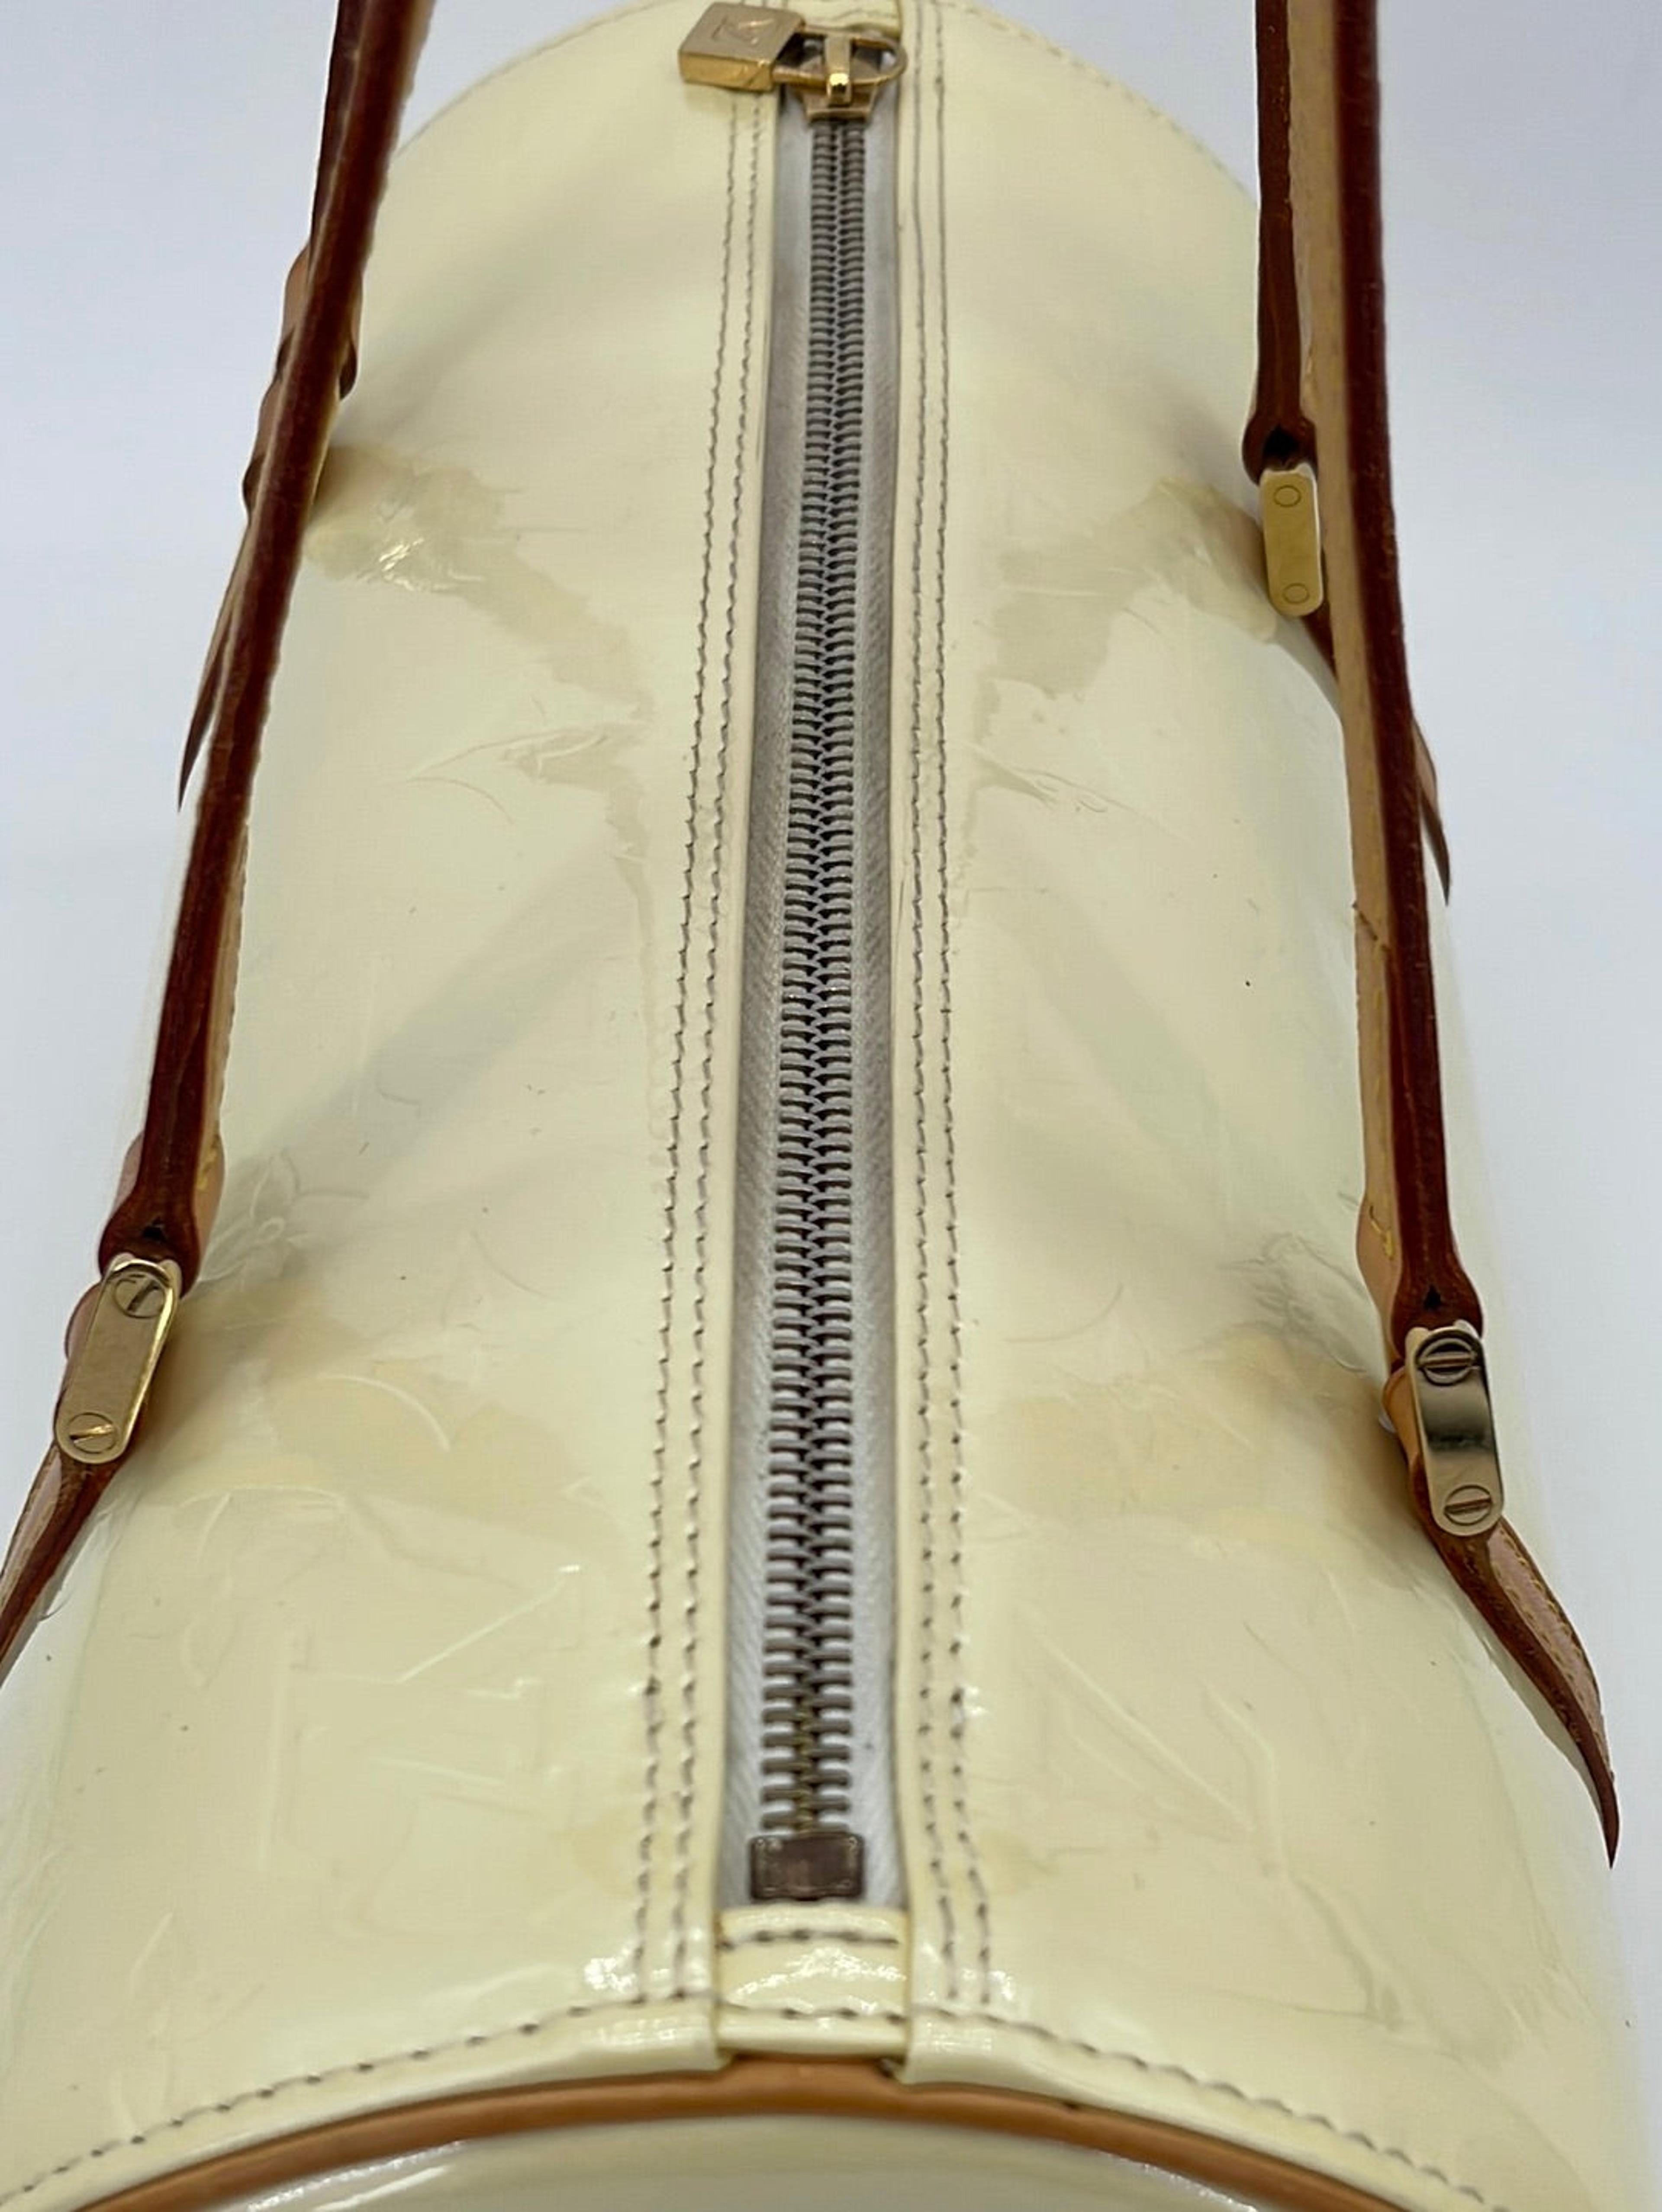 Louis Vuitton Bedford Vintage Monogram Shoulder Bag